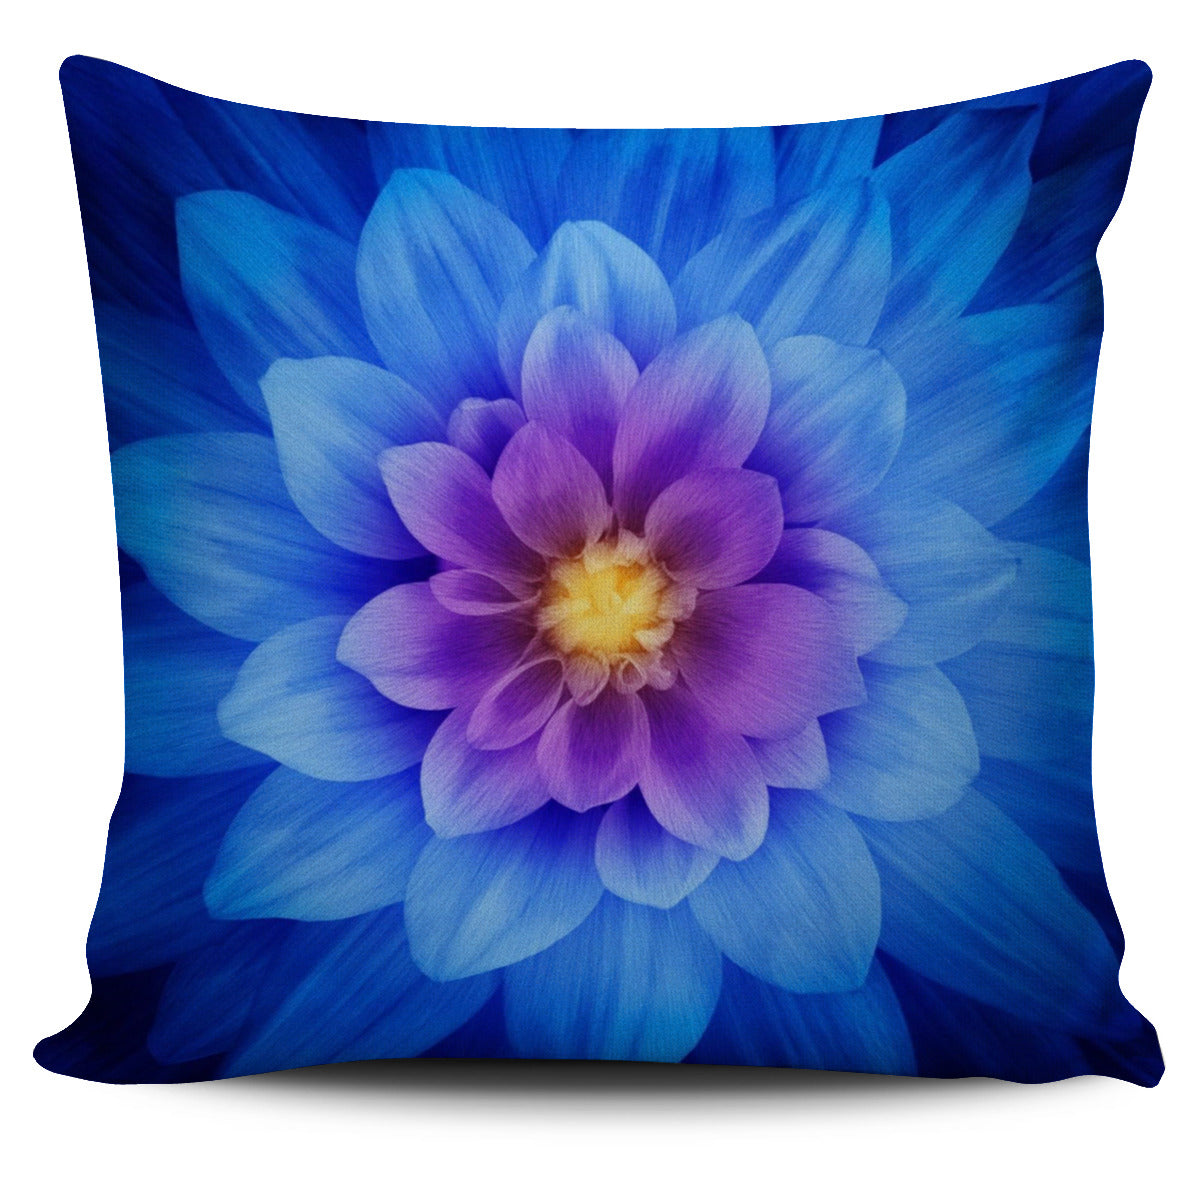 Blue Flower Pillow Cover